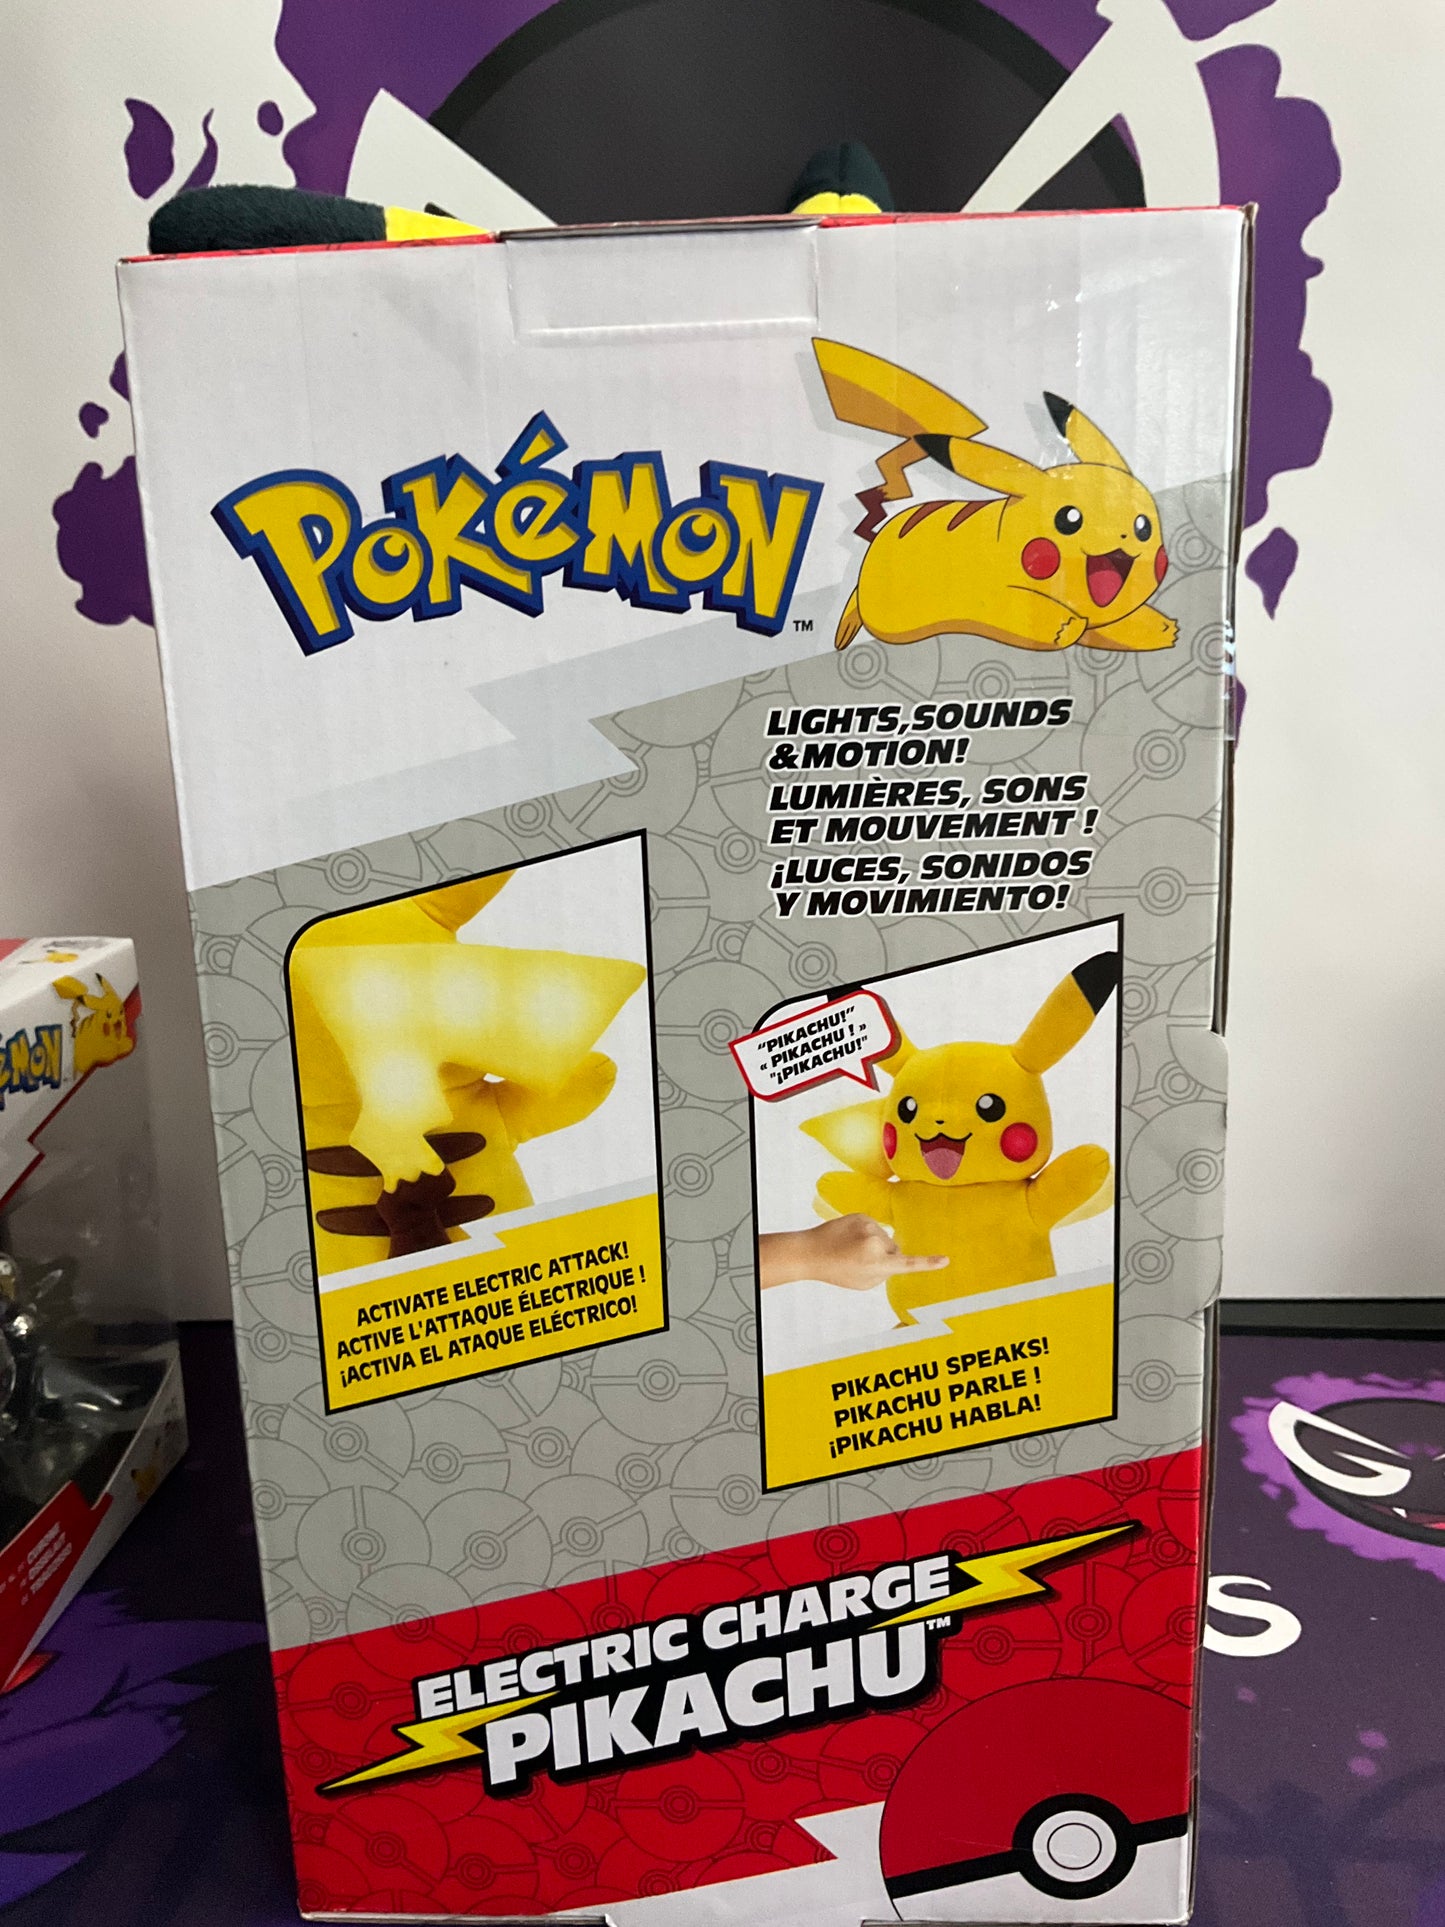 Pokémon Pikachu Electric Charge Plush W/ Lights, Sound & Motion Toy